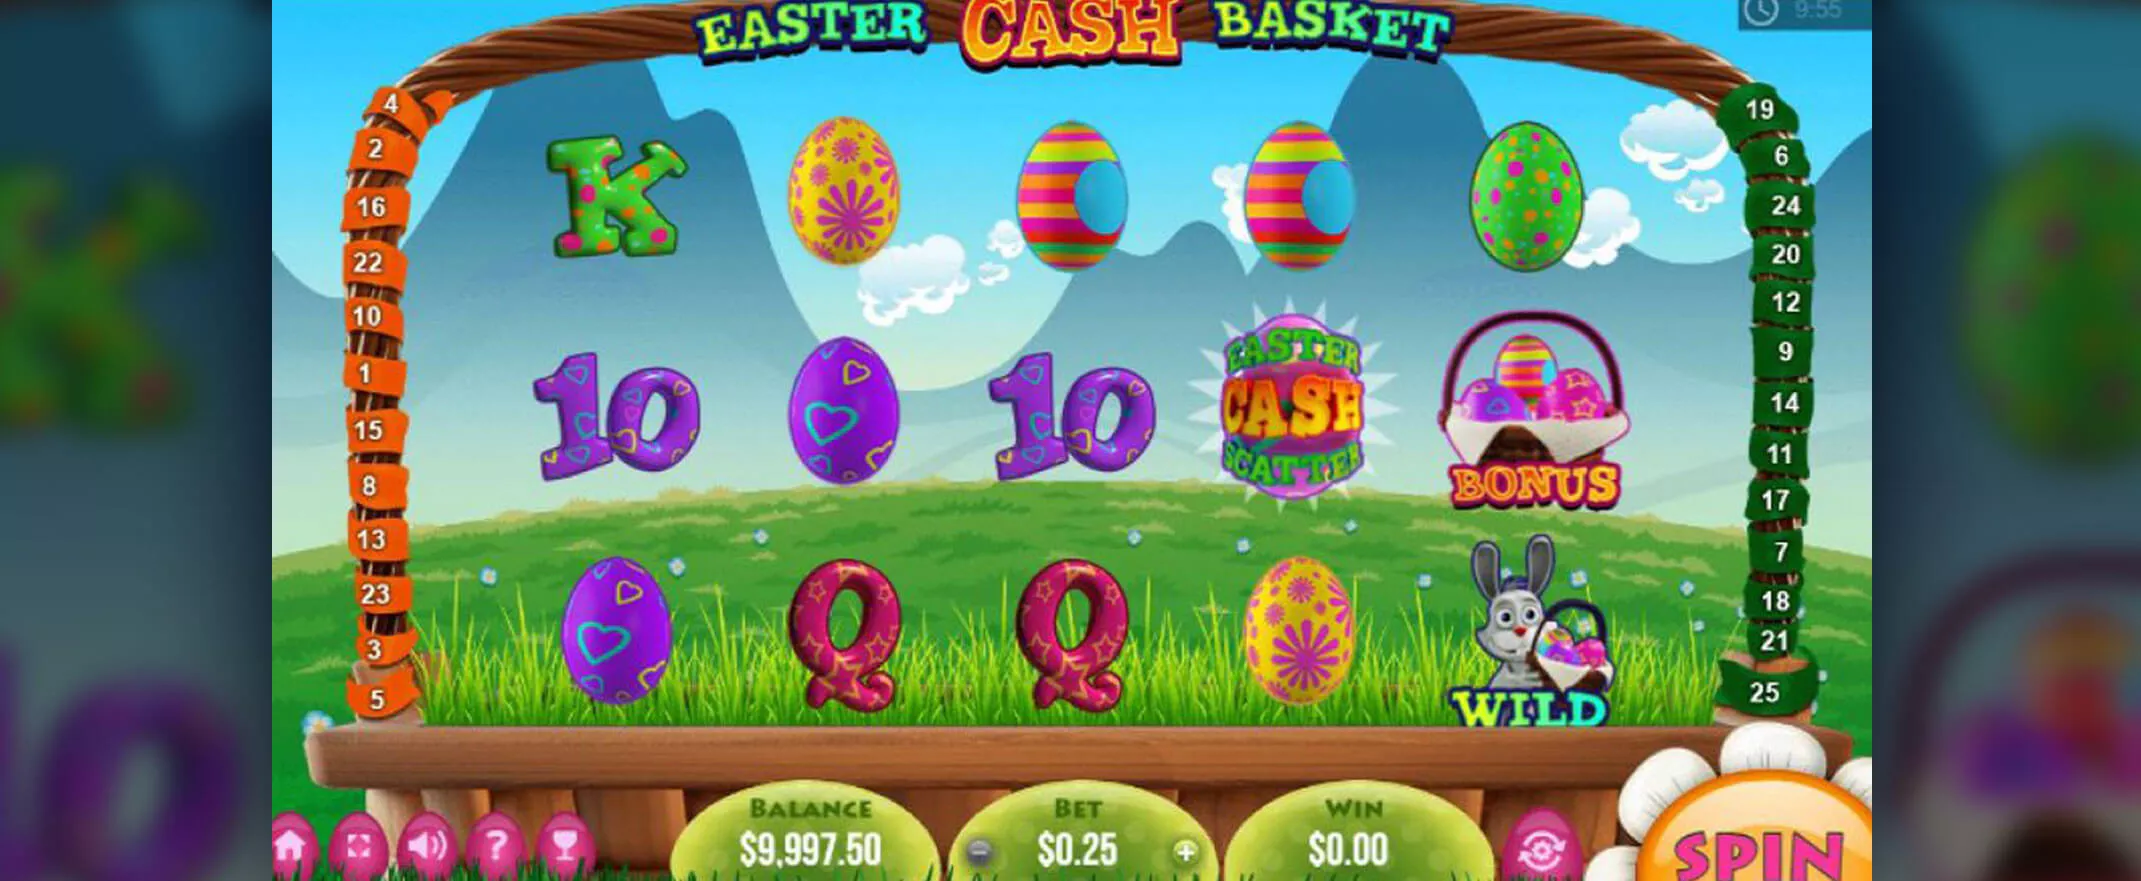 Easter Cash Basket spielautomat